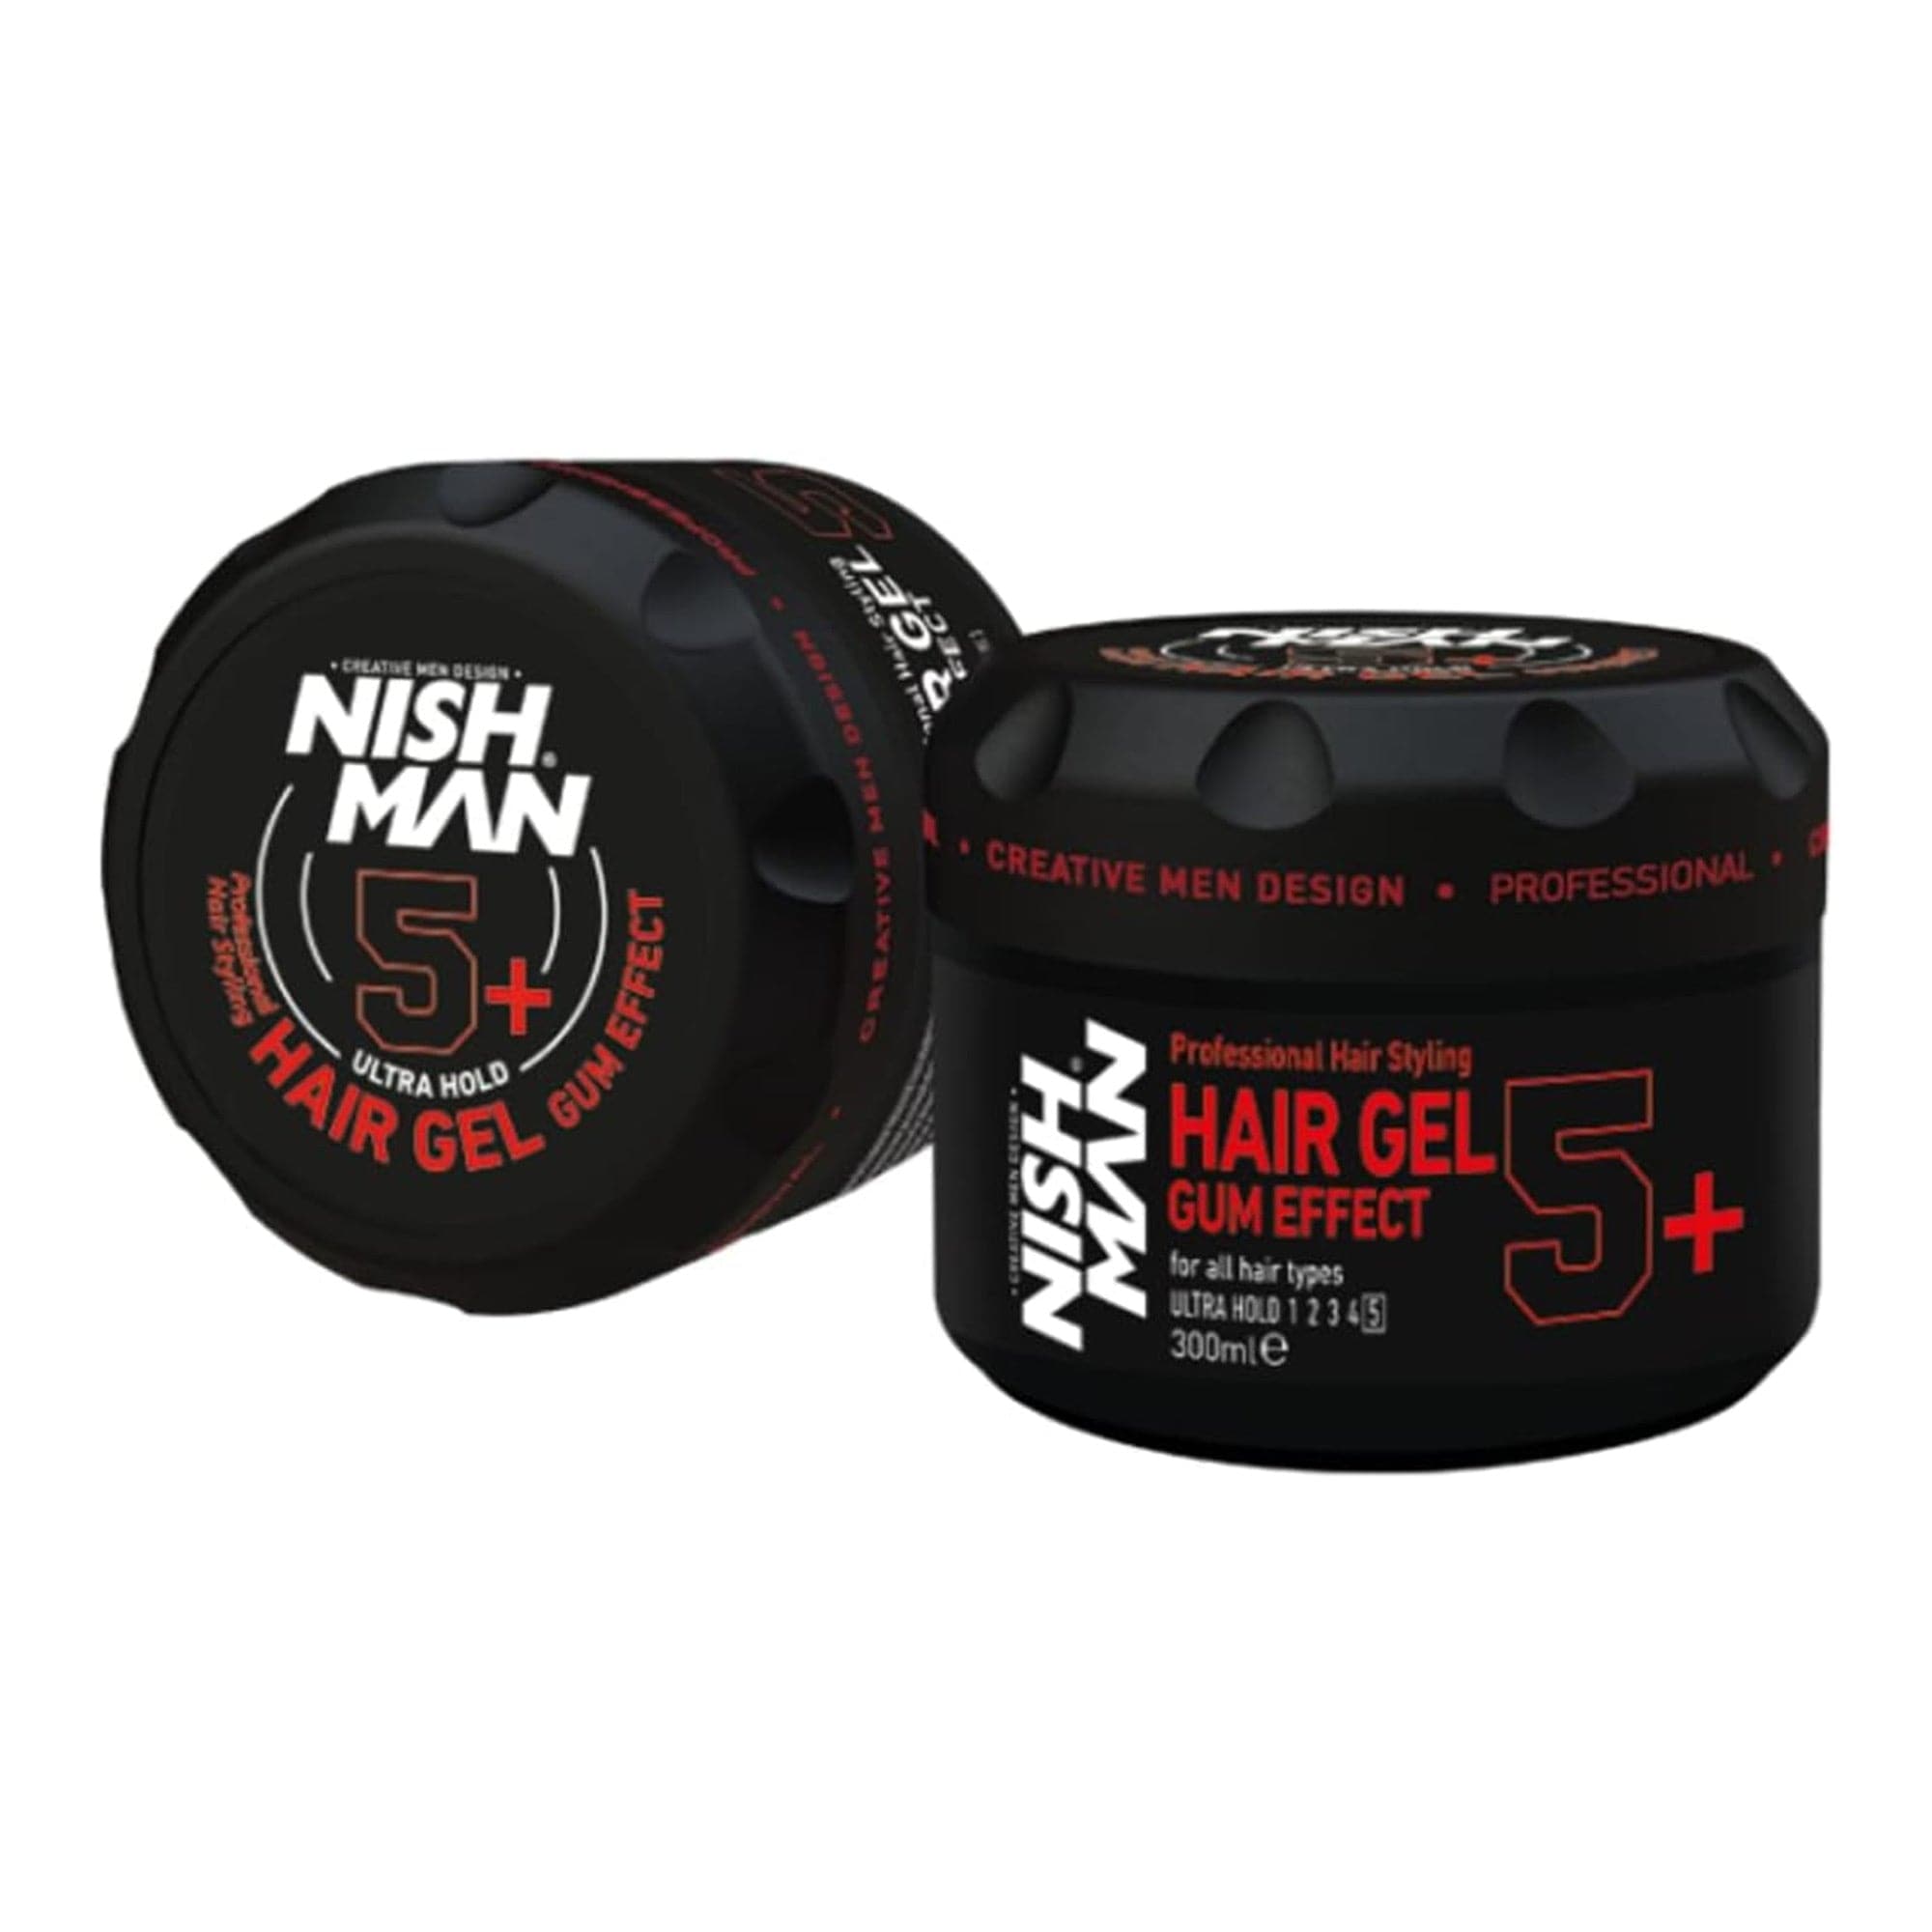 Nishman - Hair Gel Gum Effect 5+ 300ml